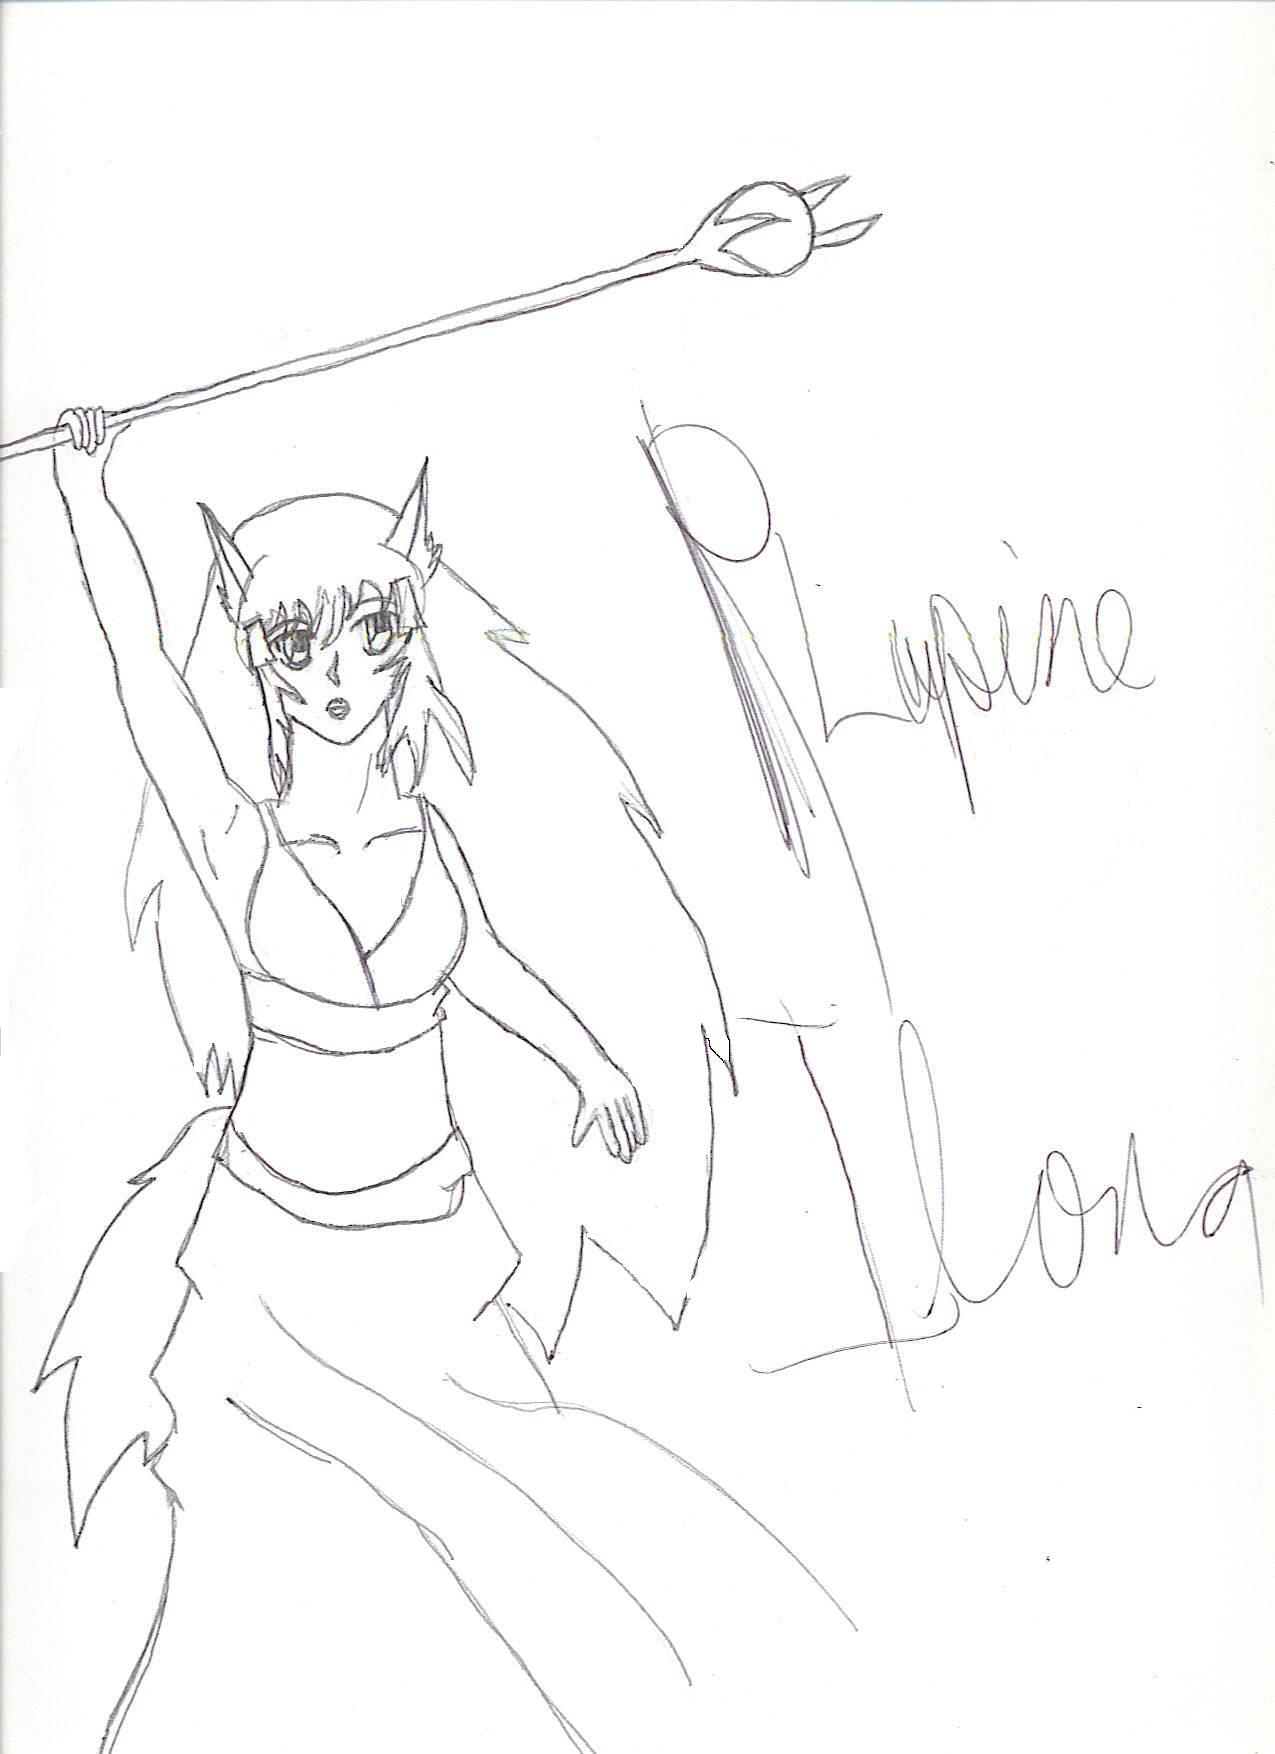 Ilona (revised) by RingLupine